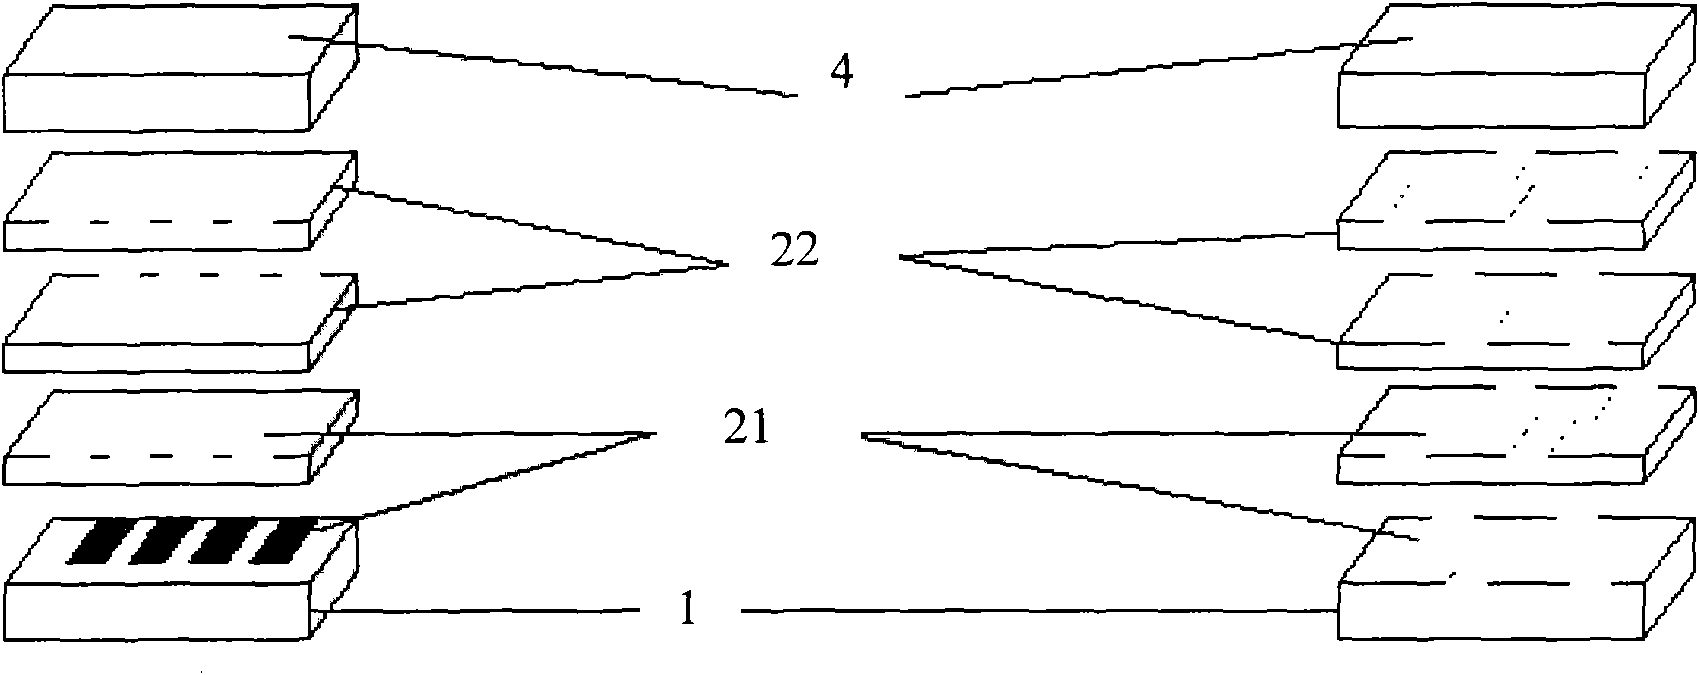 Lamination type piezoresistor network and making method thereof